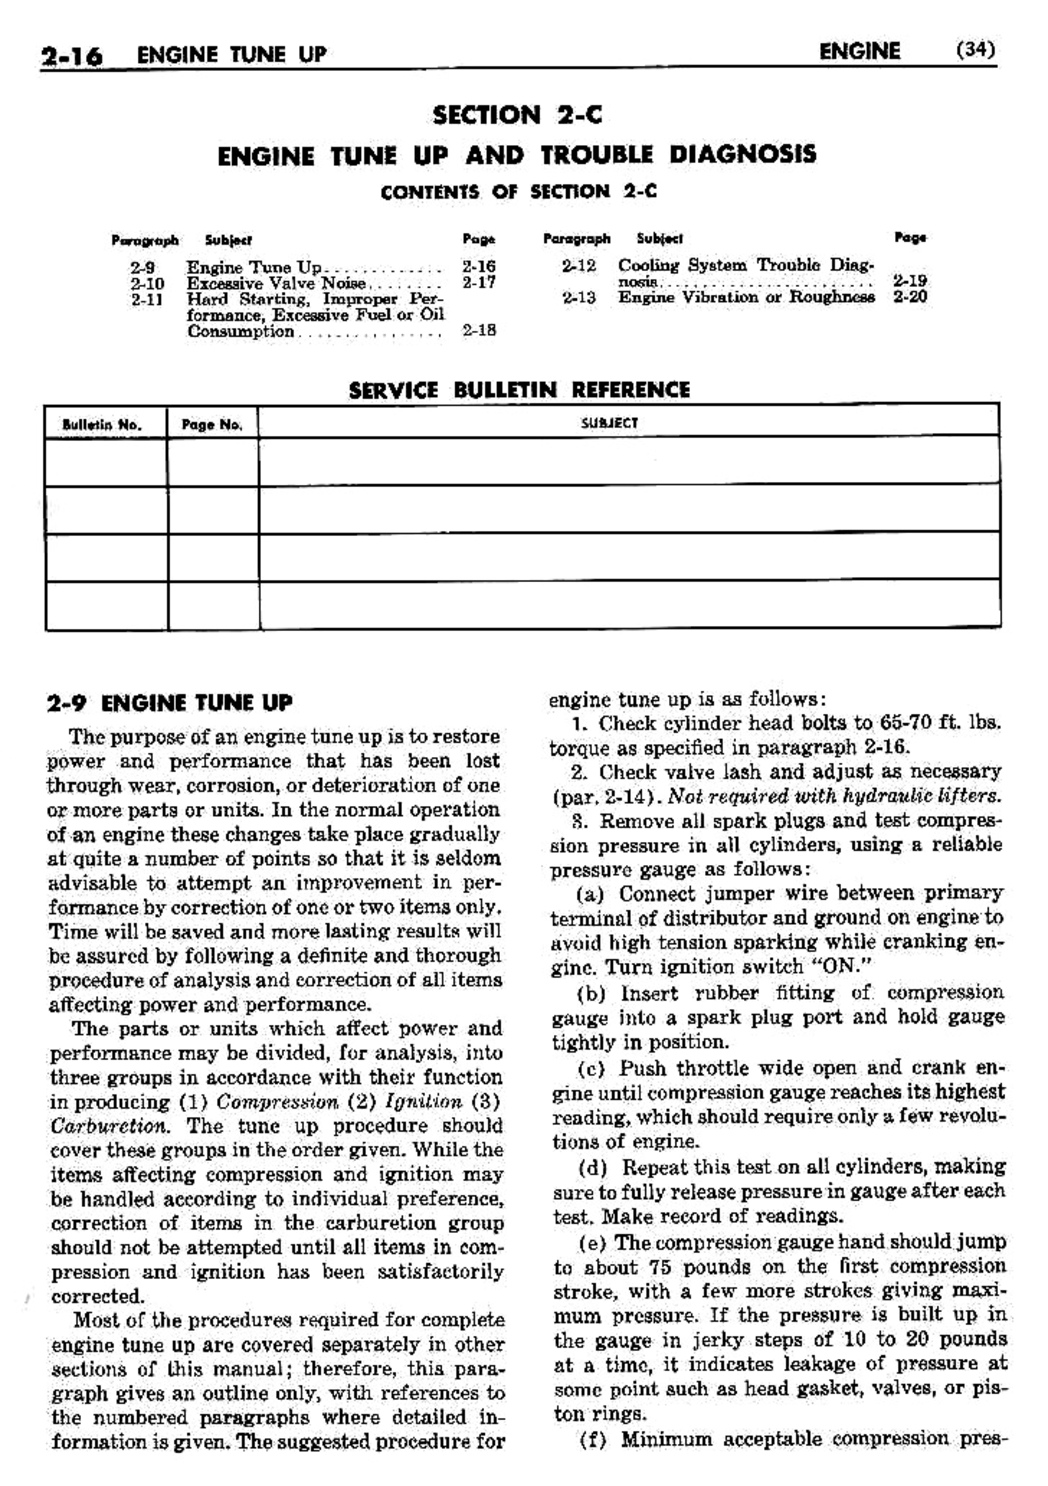 n_03 1950 Buick Shop Manual - Engine-016-016.jpg